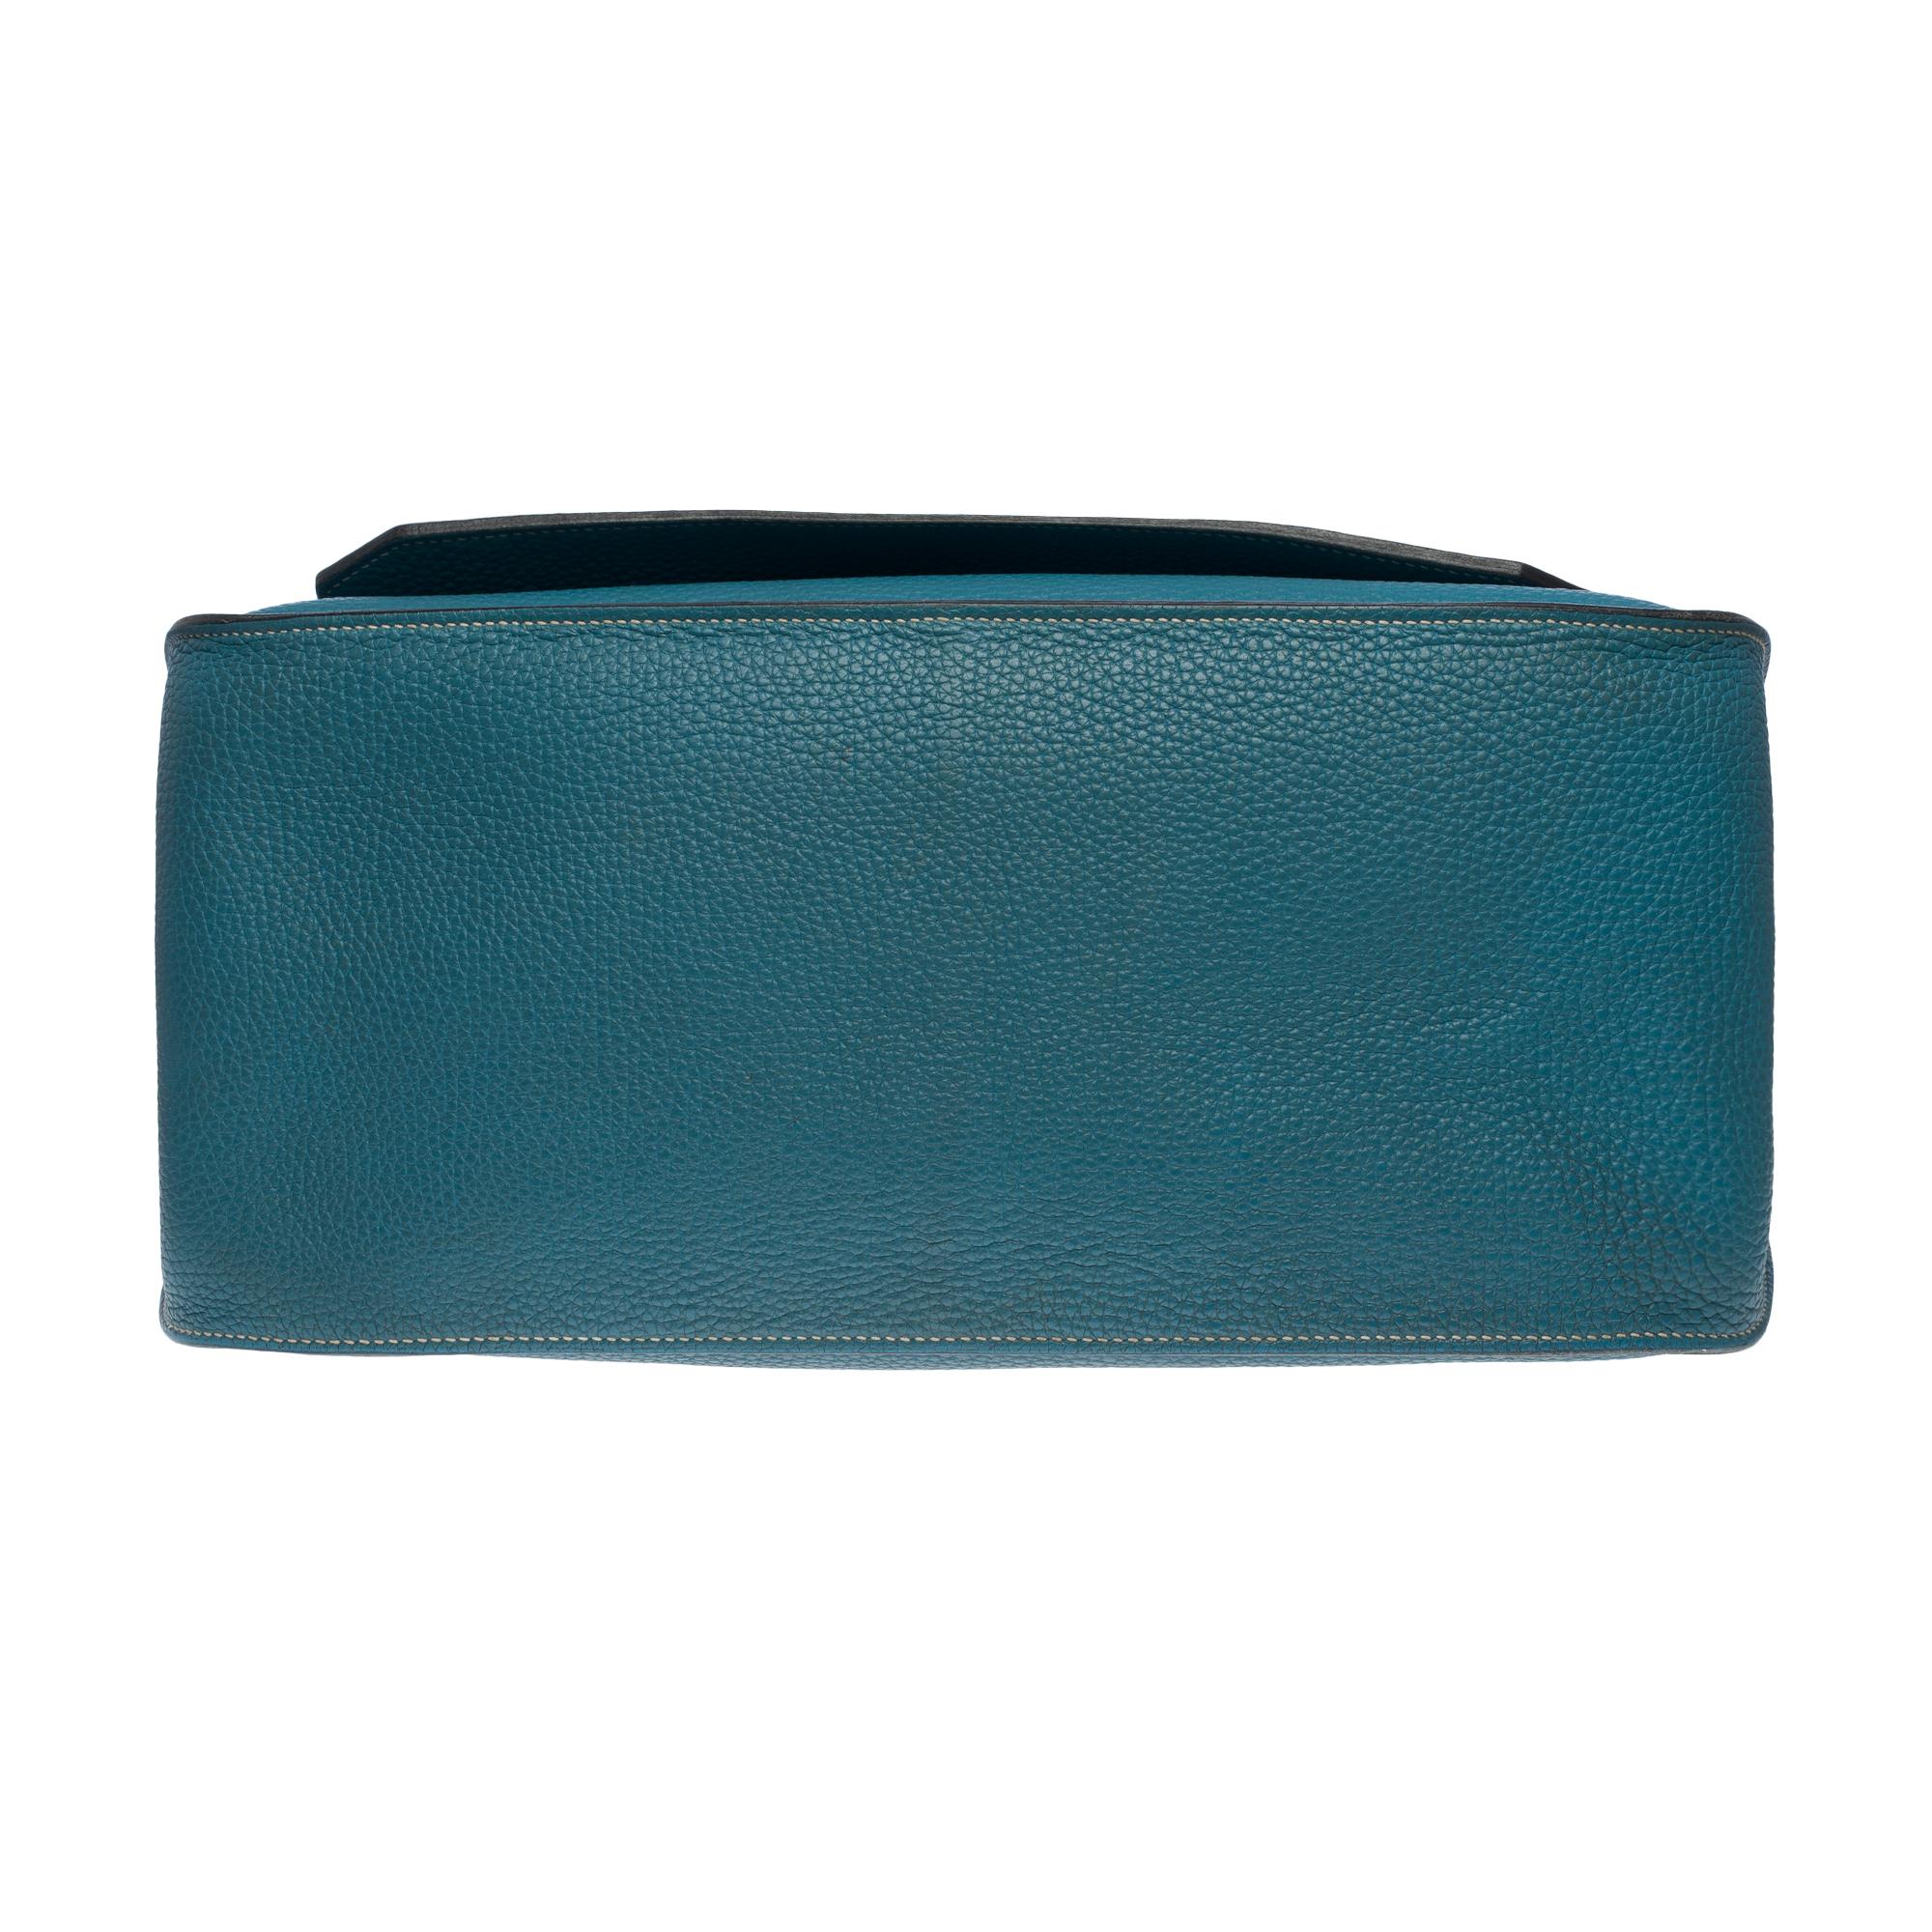 Gorgeous Hermès Jypsière 32 crossbody bag in Blue Jean Taurillon leather, PHW 9